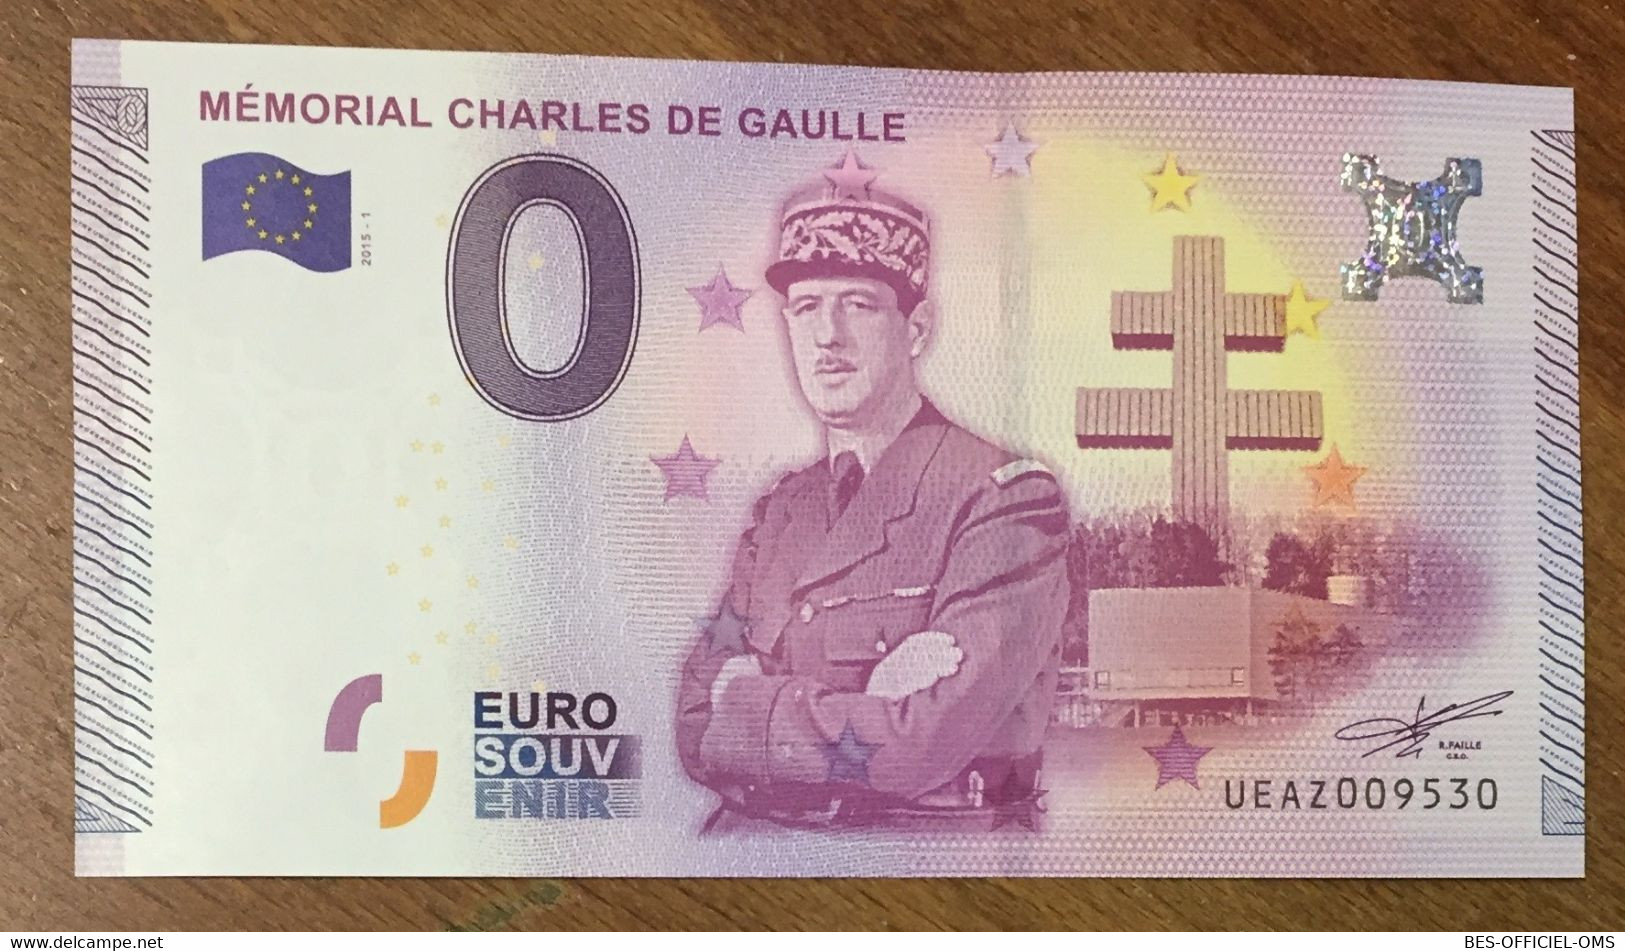 2015 BILLET 0 EURO SOUVENIR DPT 50 MÉMORIAL CHARLES DE GAULLE ZERO 0 EURO SCHEIN BANKNOTE PAPER MONEY - Private Proofs / Unofficial